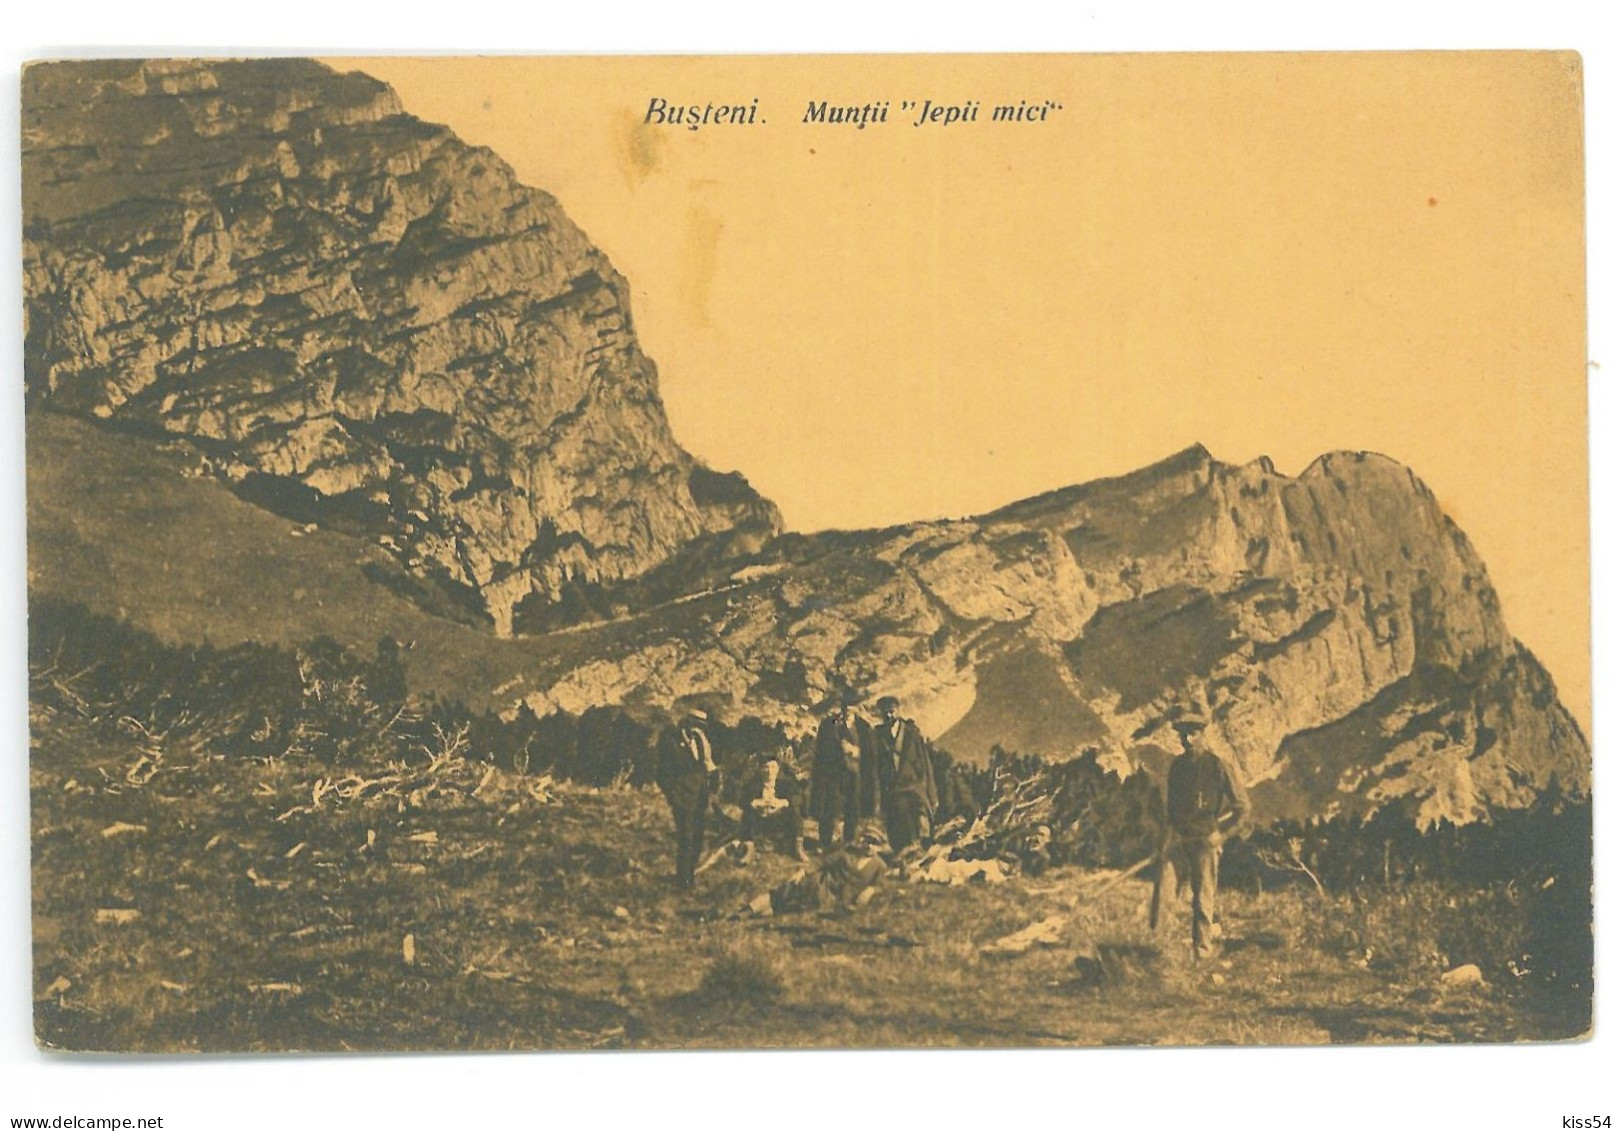 RO - 25190 BUSTENI, Prahova, Jepii Mici Mountain, Romania - Old Postcard - Unused - Romania